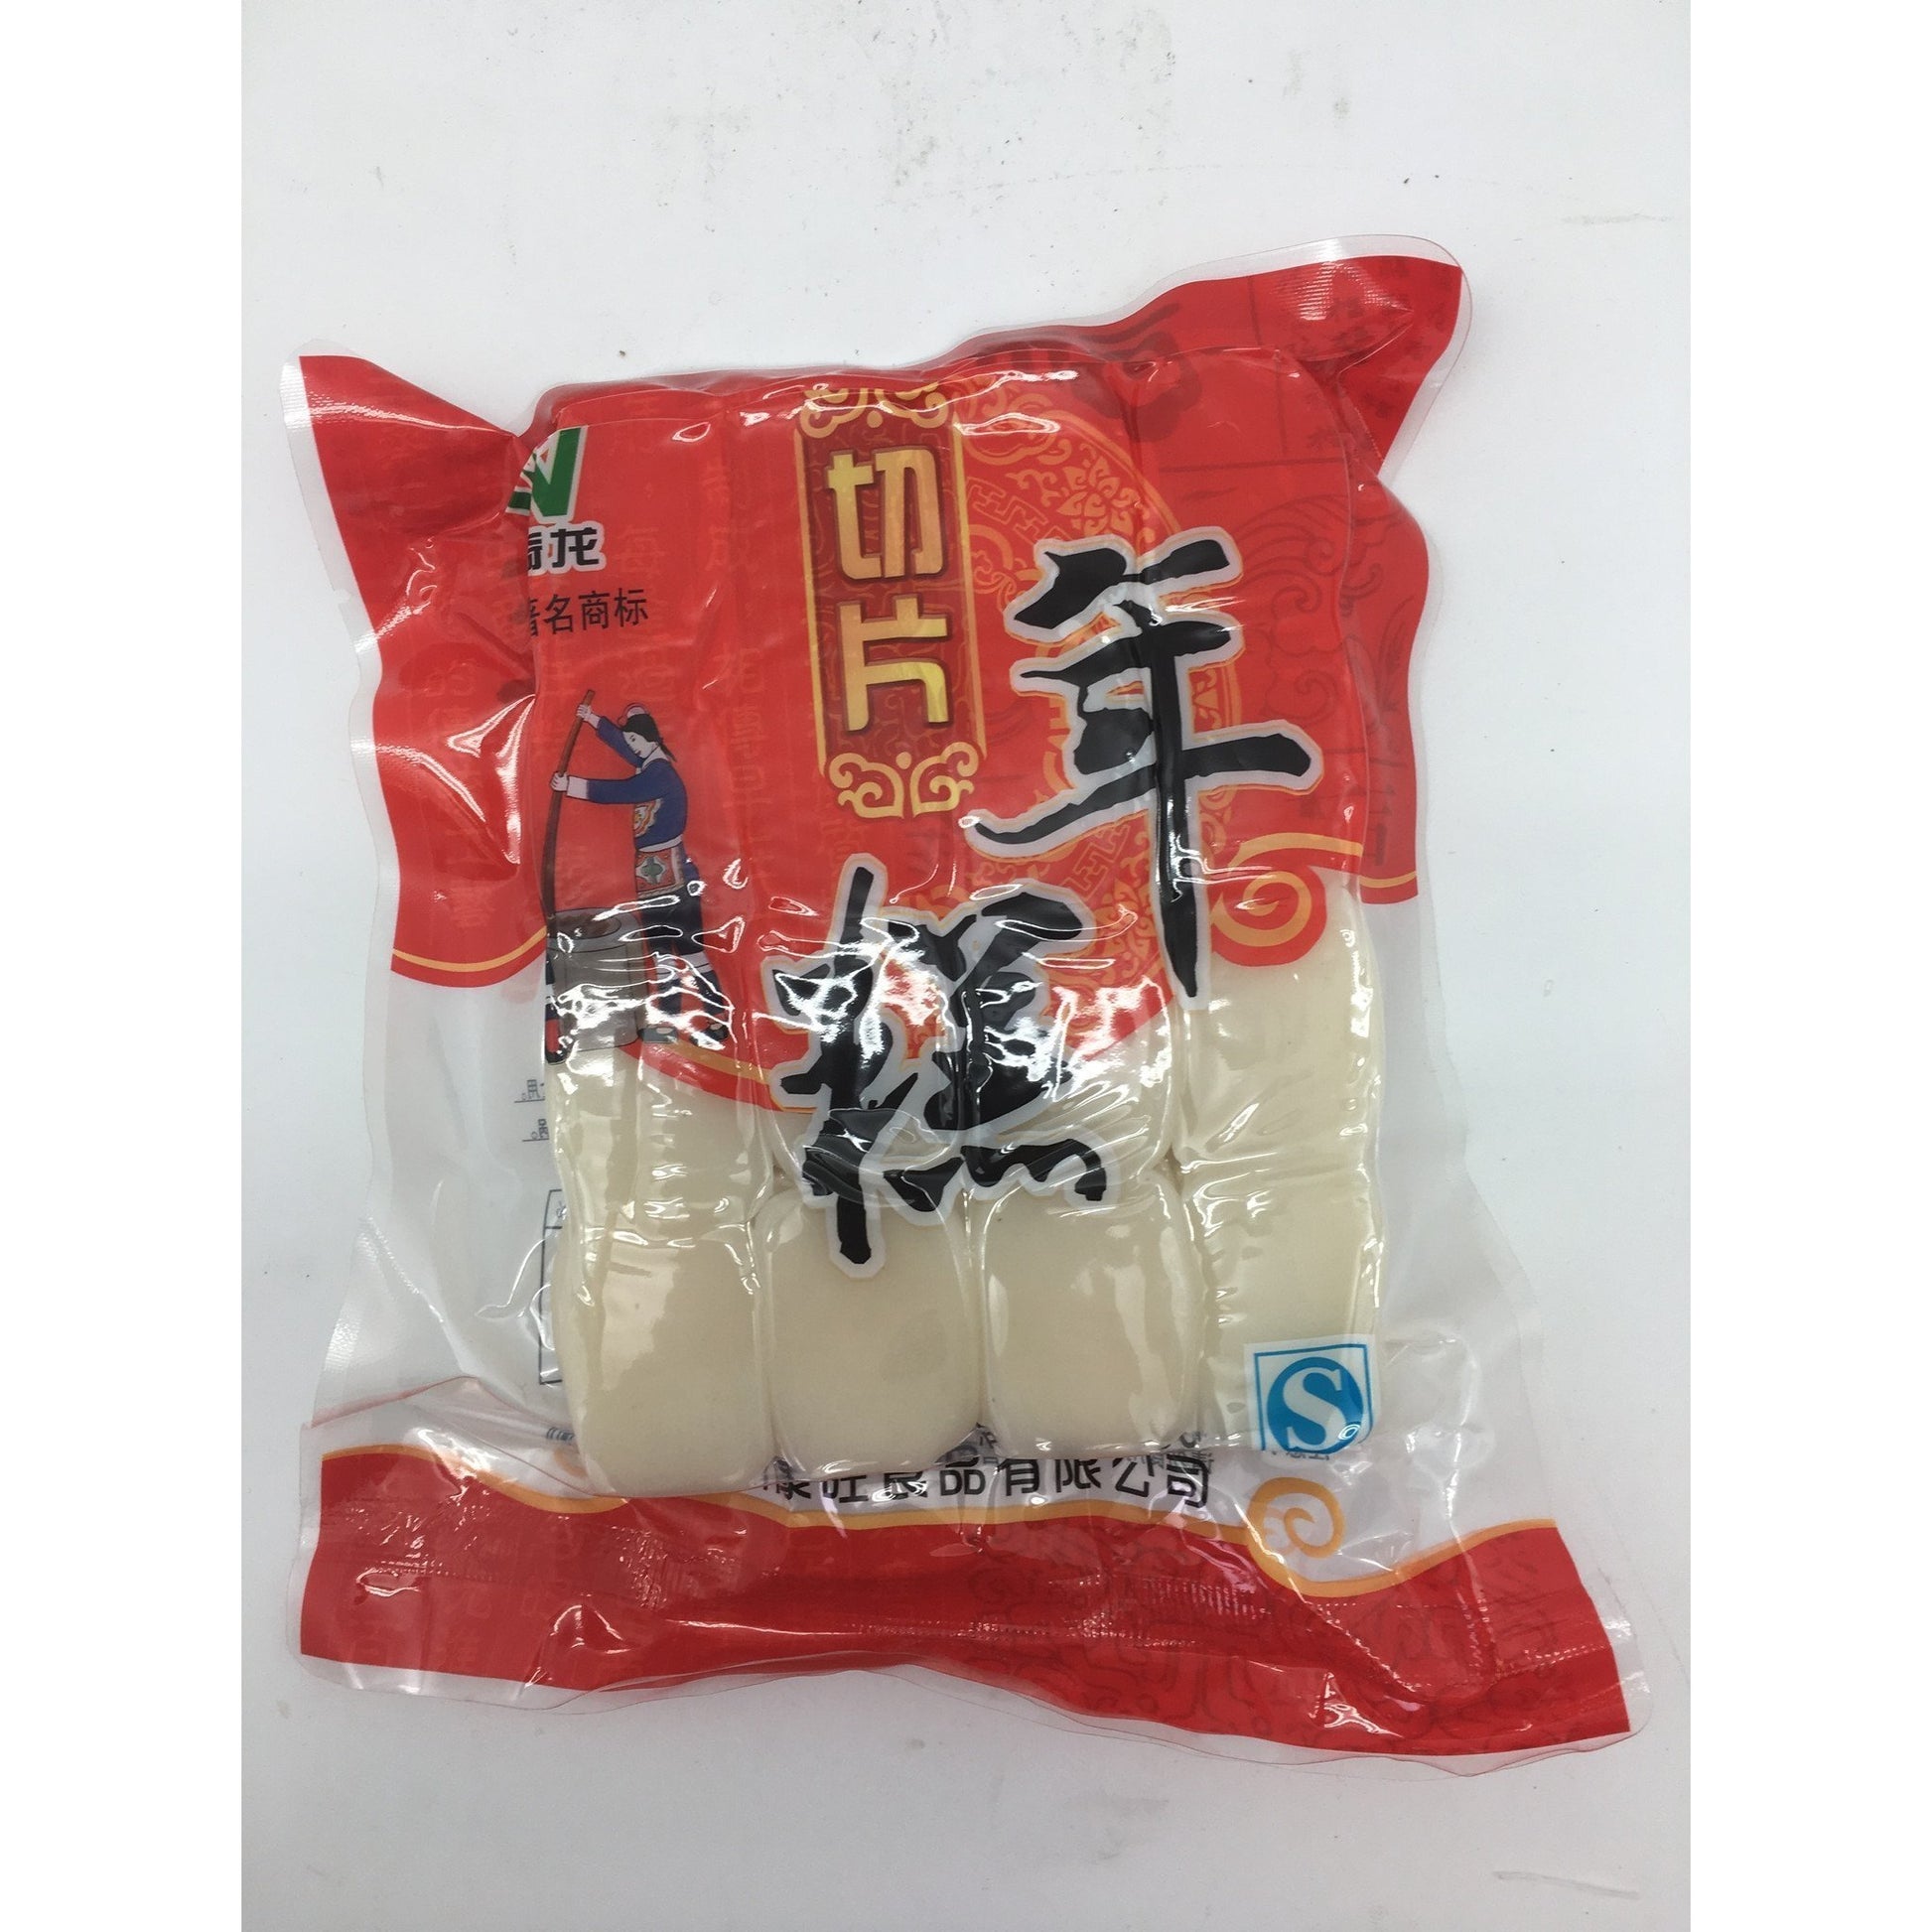 D305S Wang Qi Brand- Rice Cakes 400g - 28 bags / 1 CTN - New Eastland Pty Ltd - Asian food wholesalers